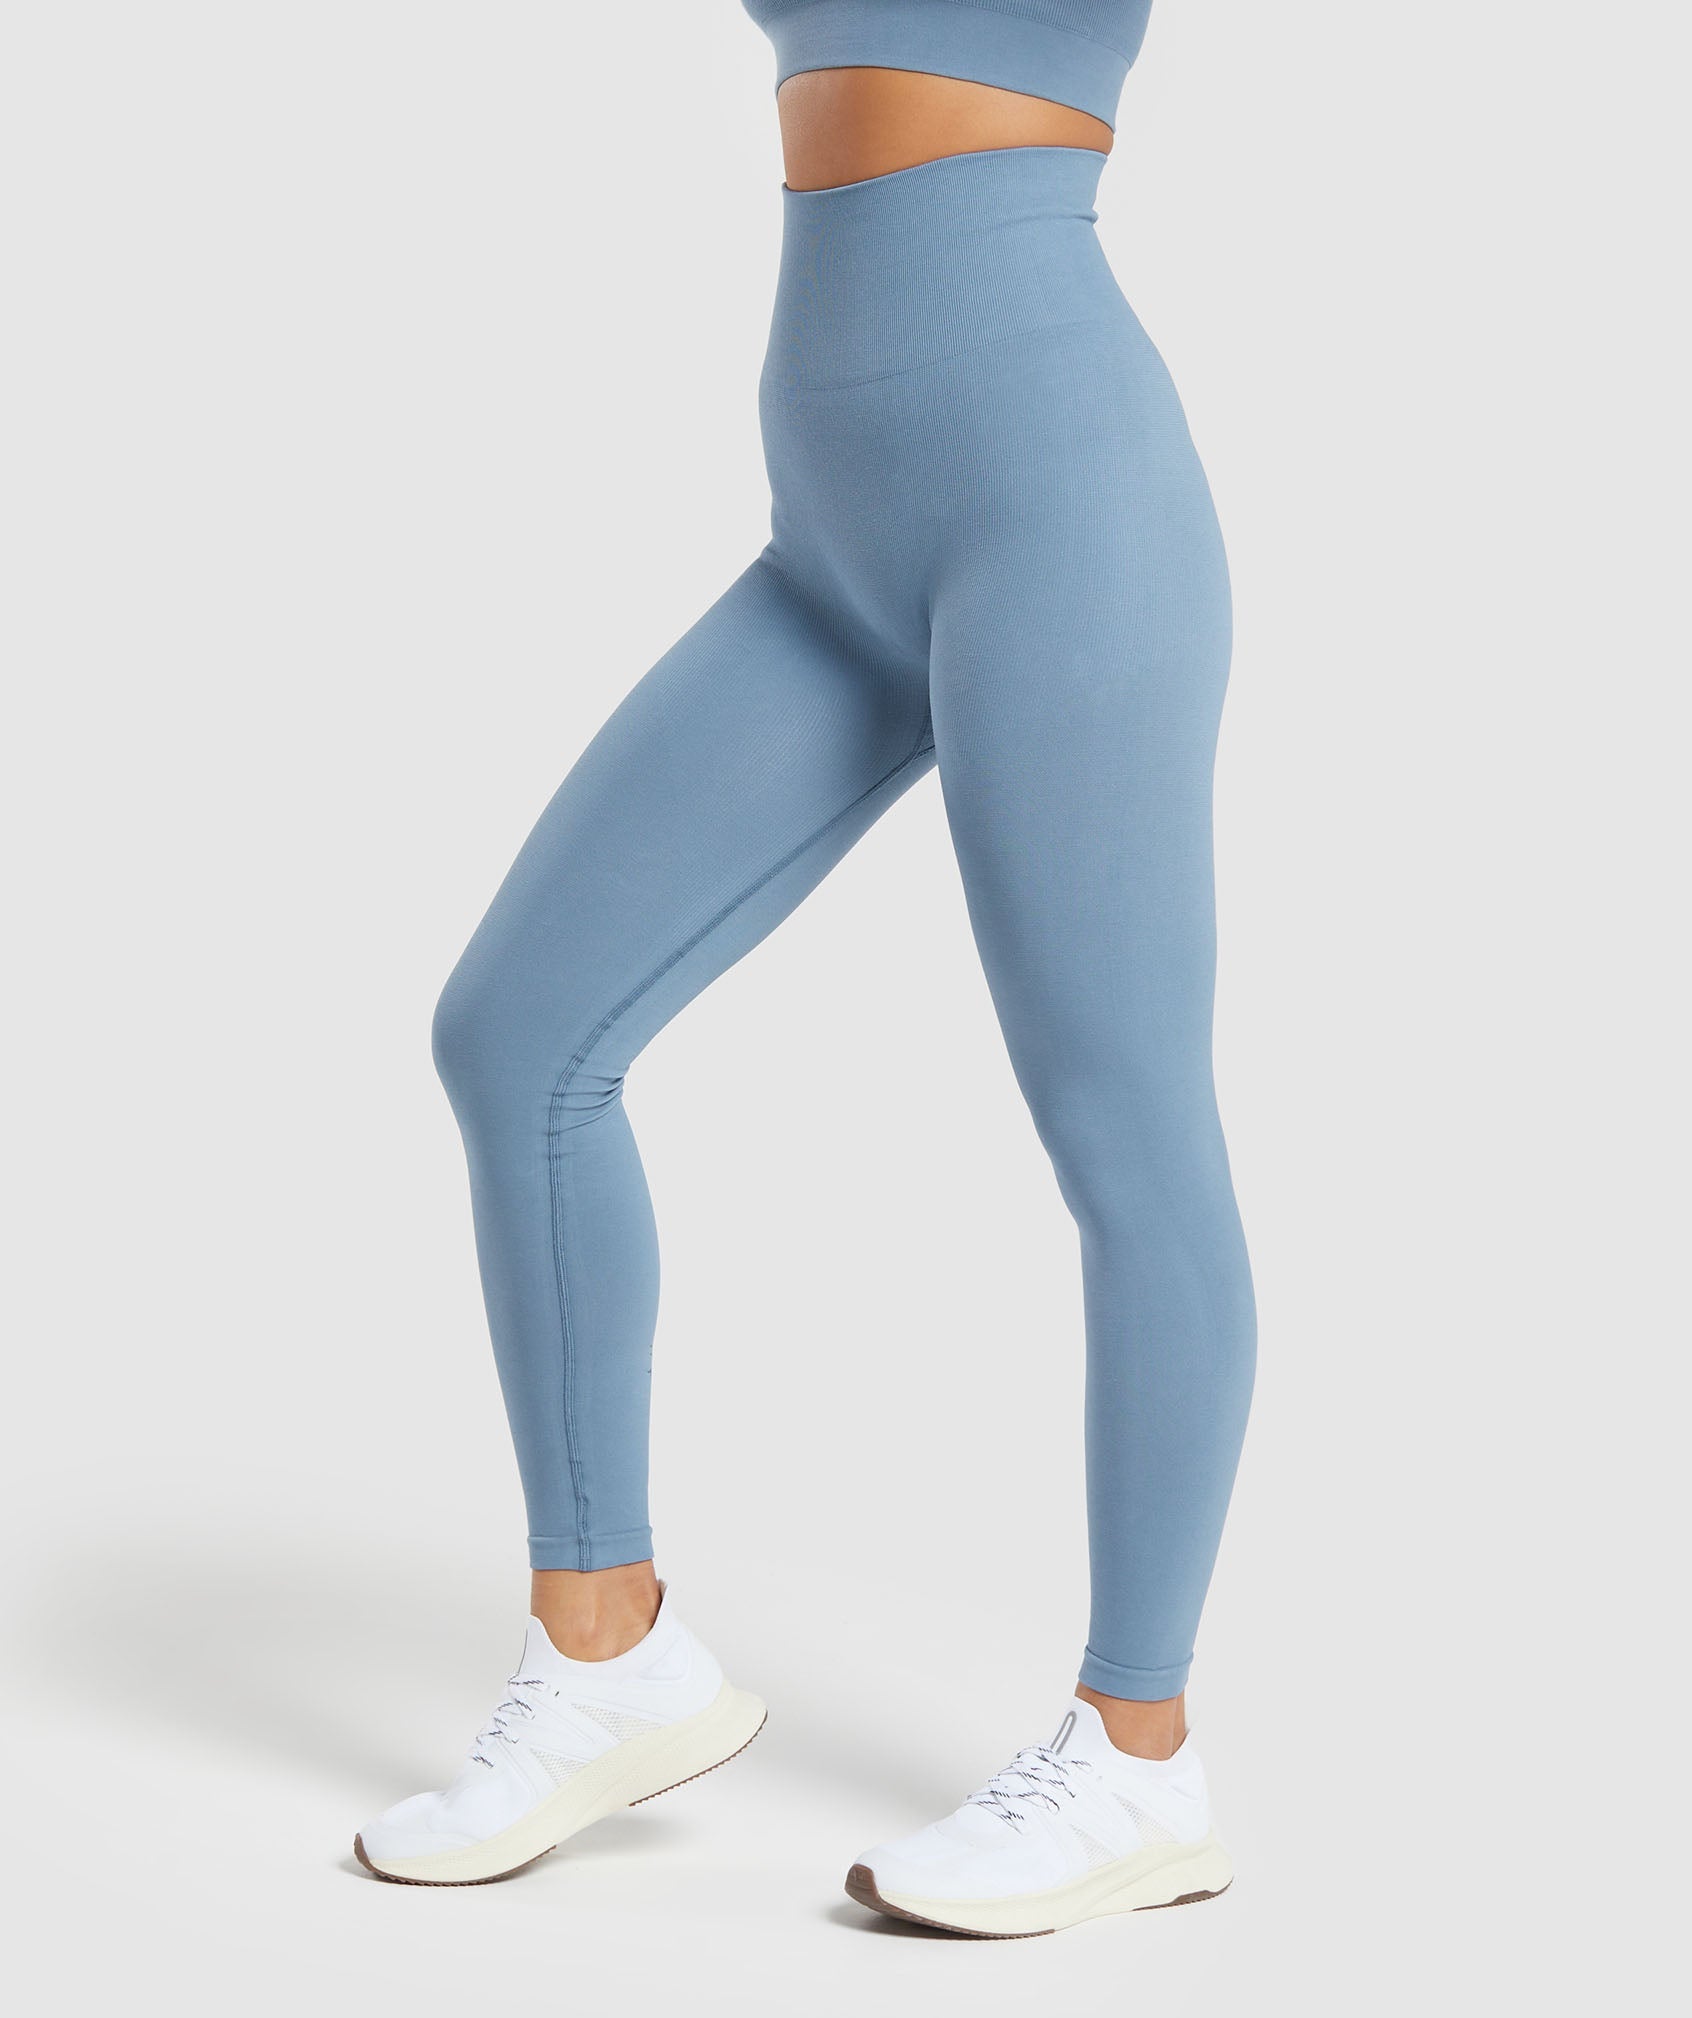 FLX Blue Grey Skinny Athletic Leggings Women's Size Small - beyond